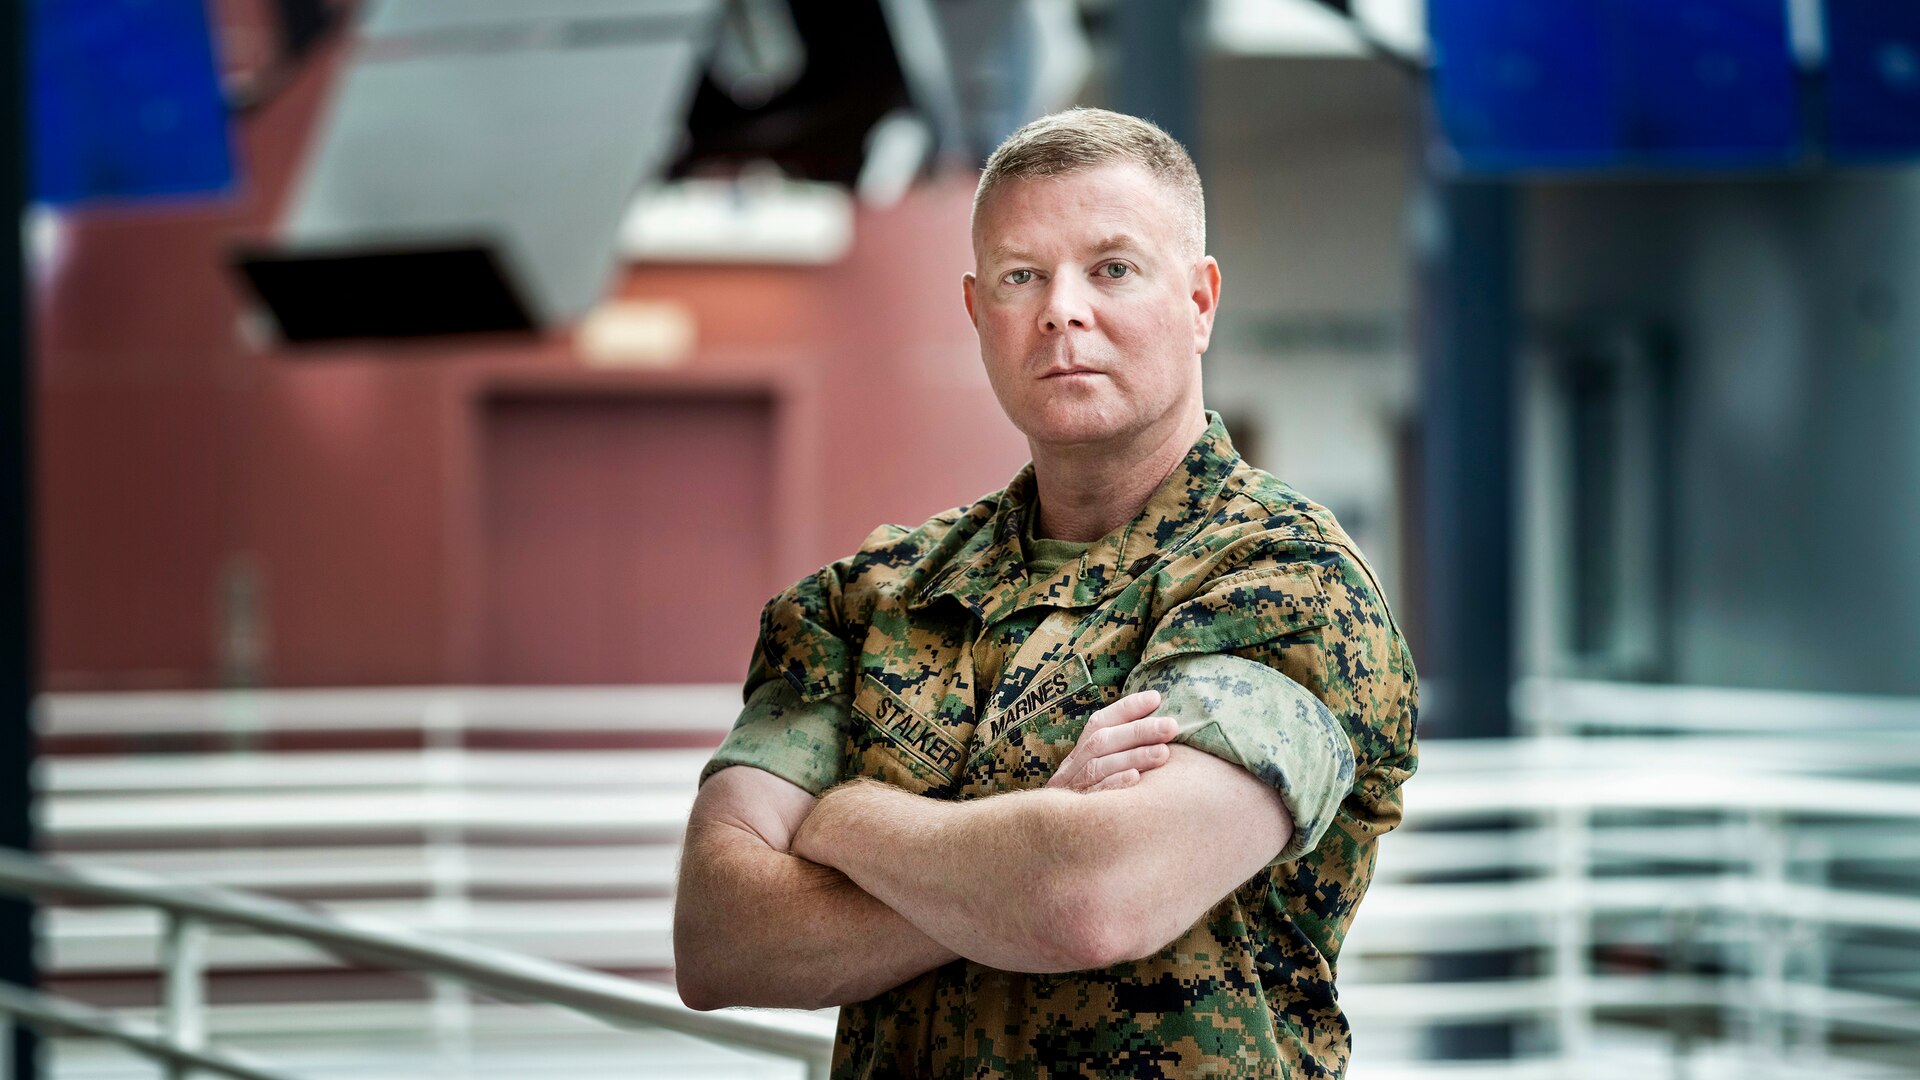 U.S. Marine Corps Master Gunnery Sgt. Scott Stalker